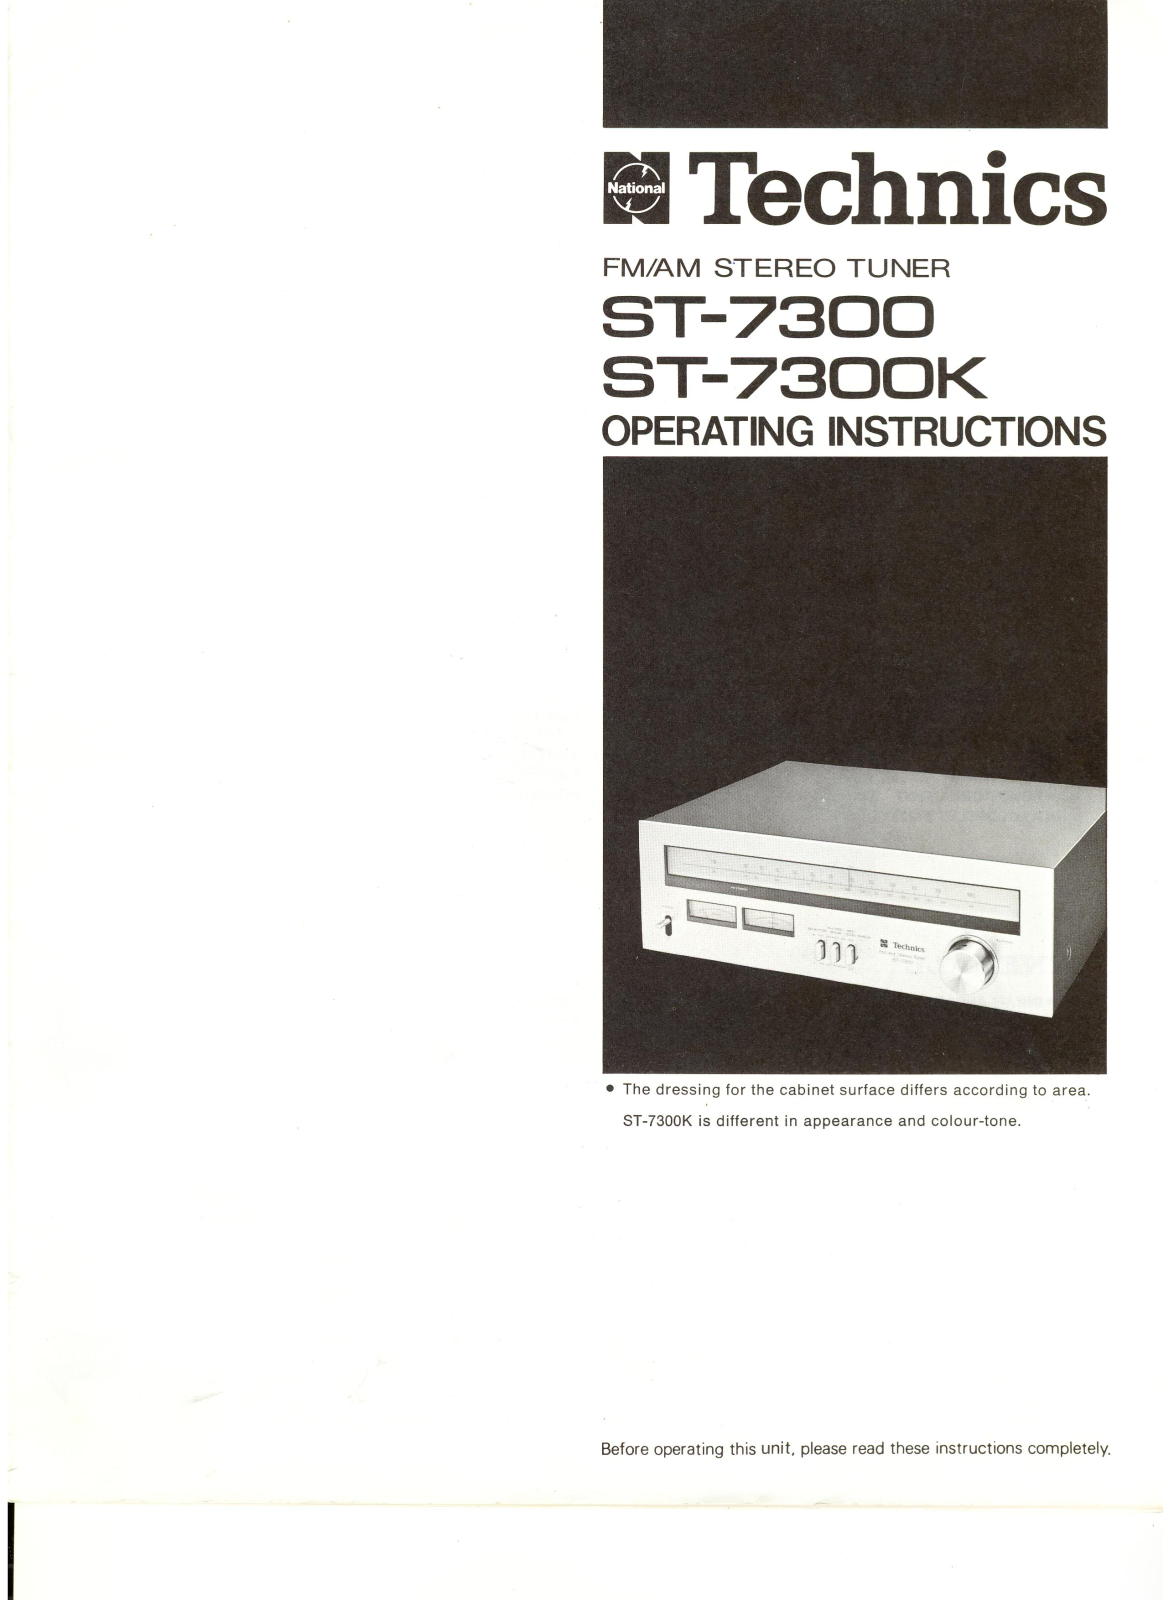 TECHNICS ST-7300K User Manual